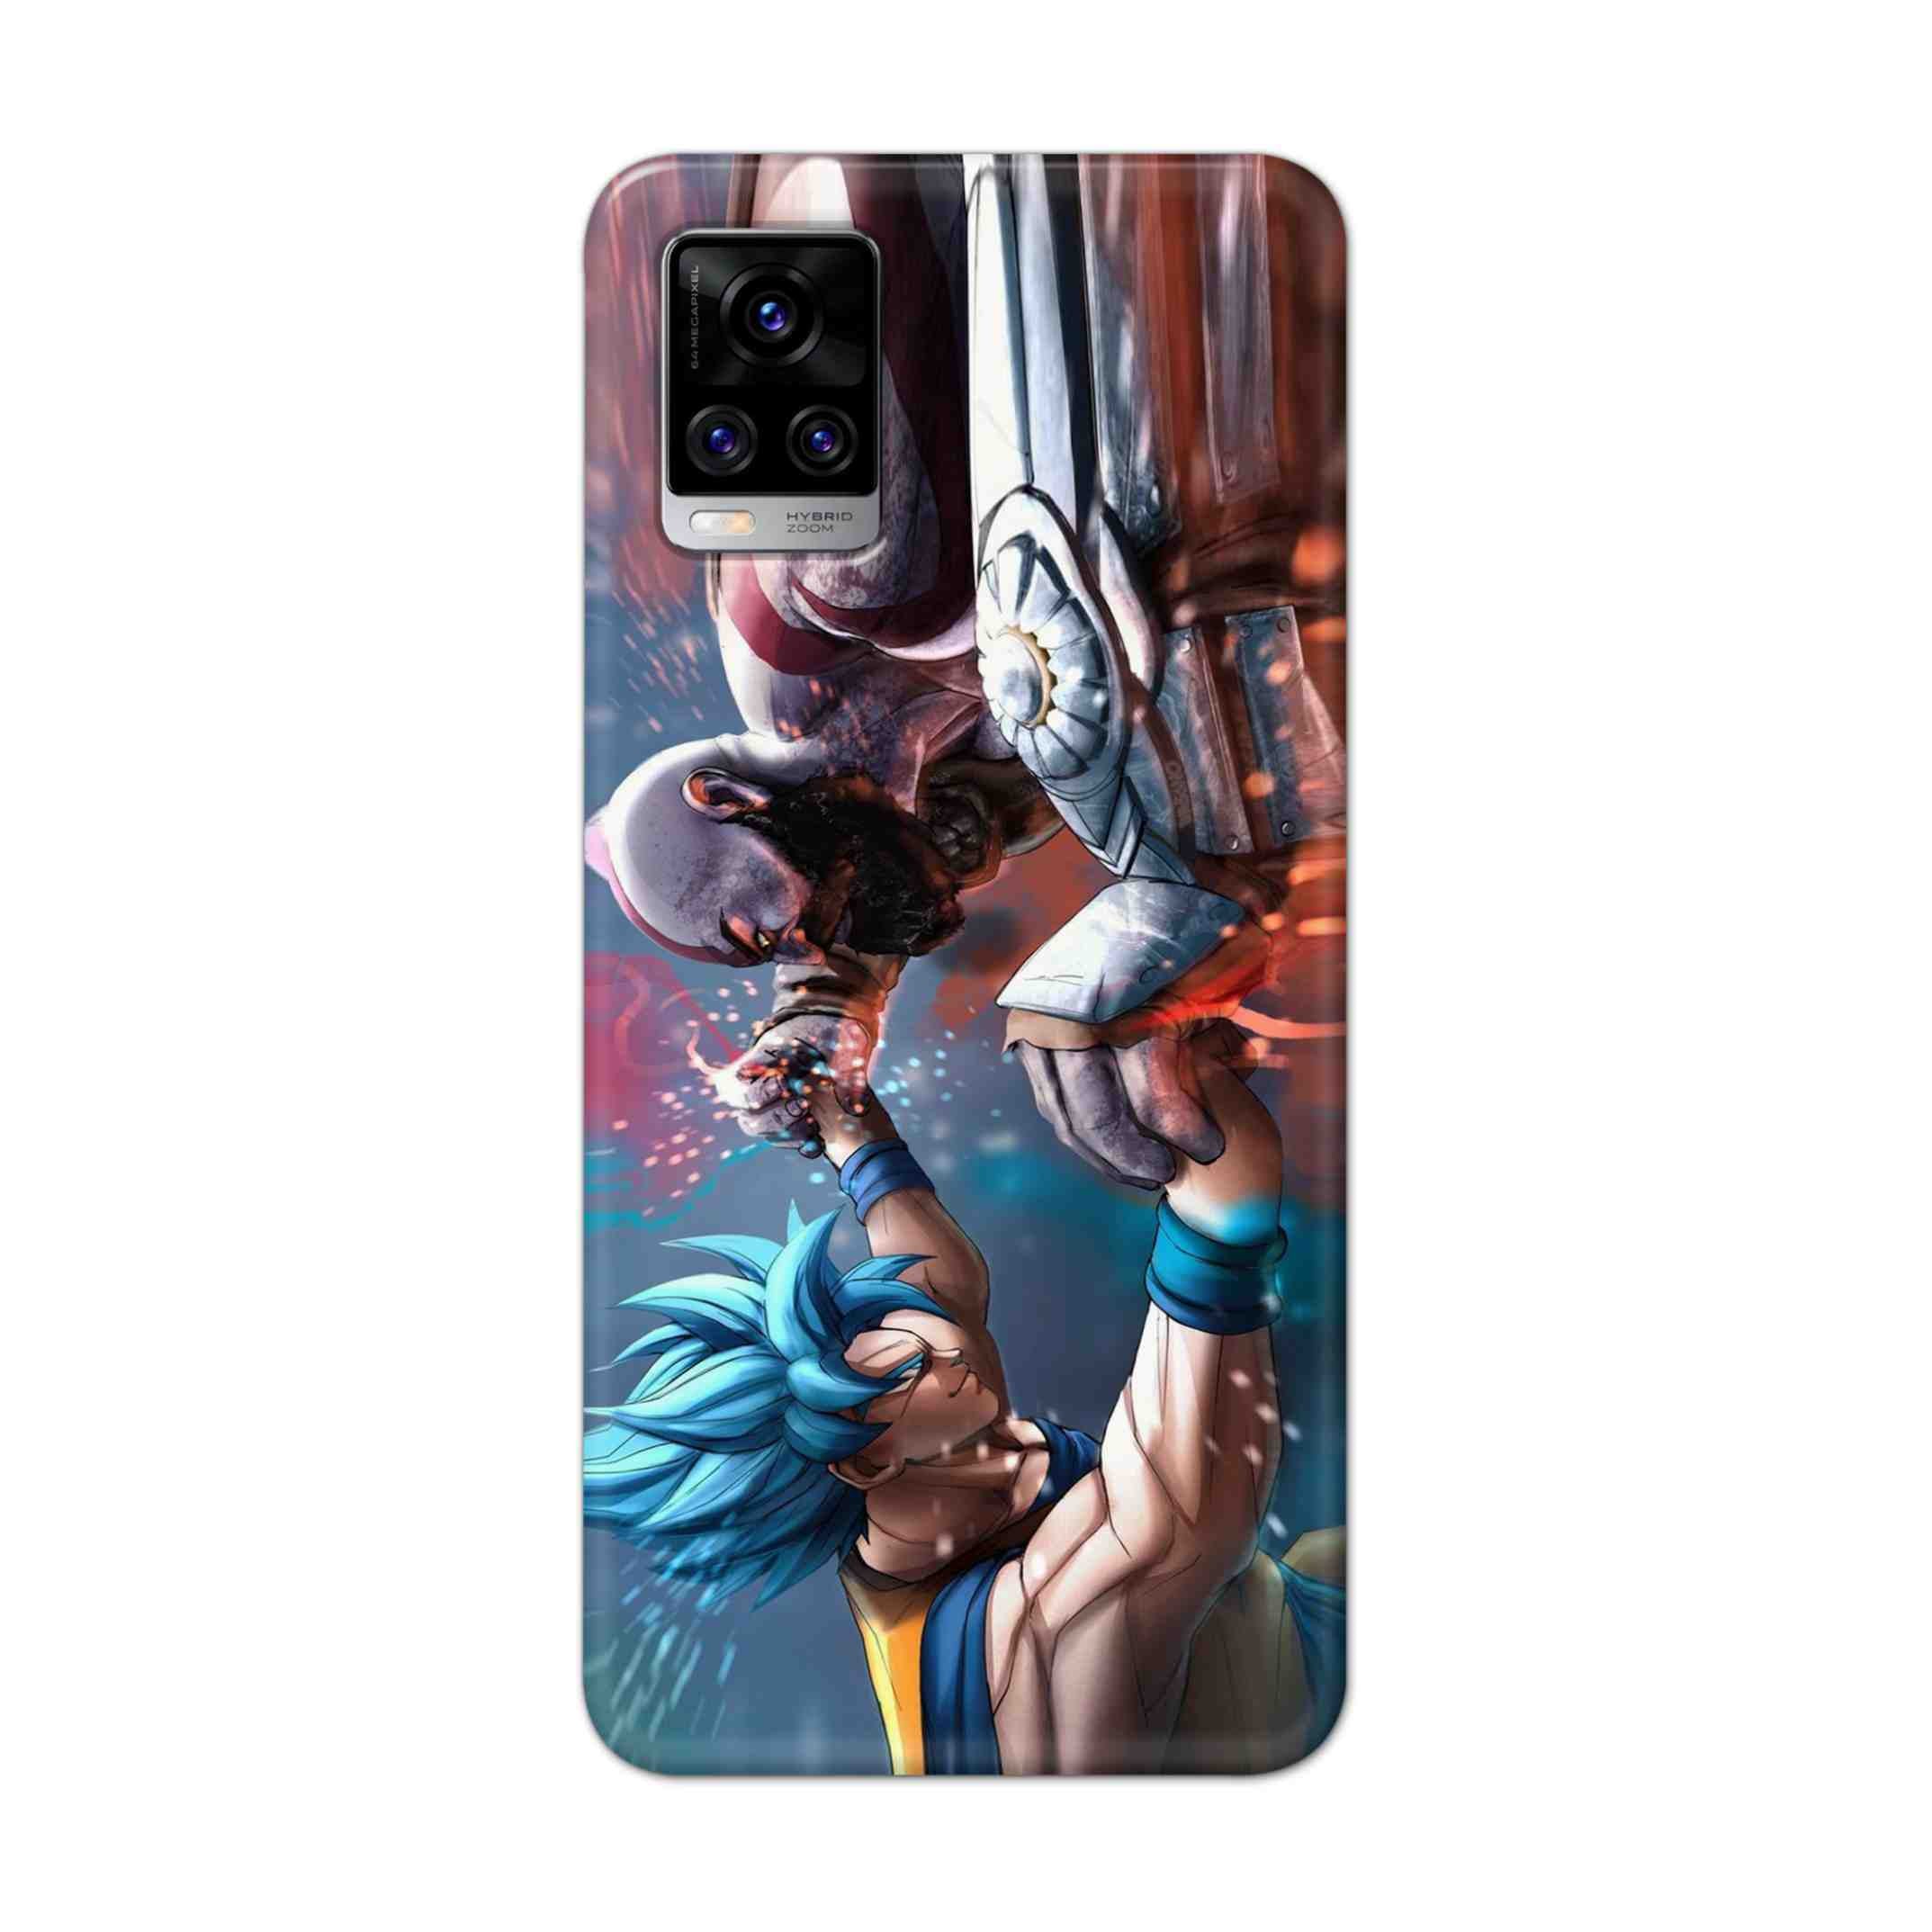 Buy Goku Vs Kratos Hard Back Mobile Phone Case Cover For Vivo V20 Pro Online